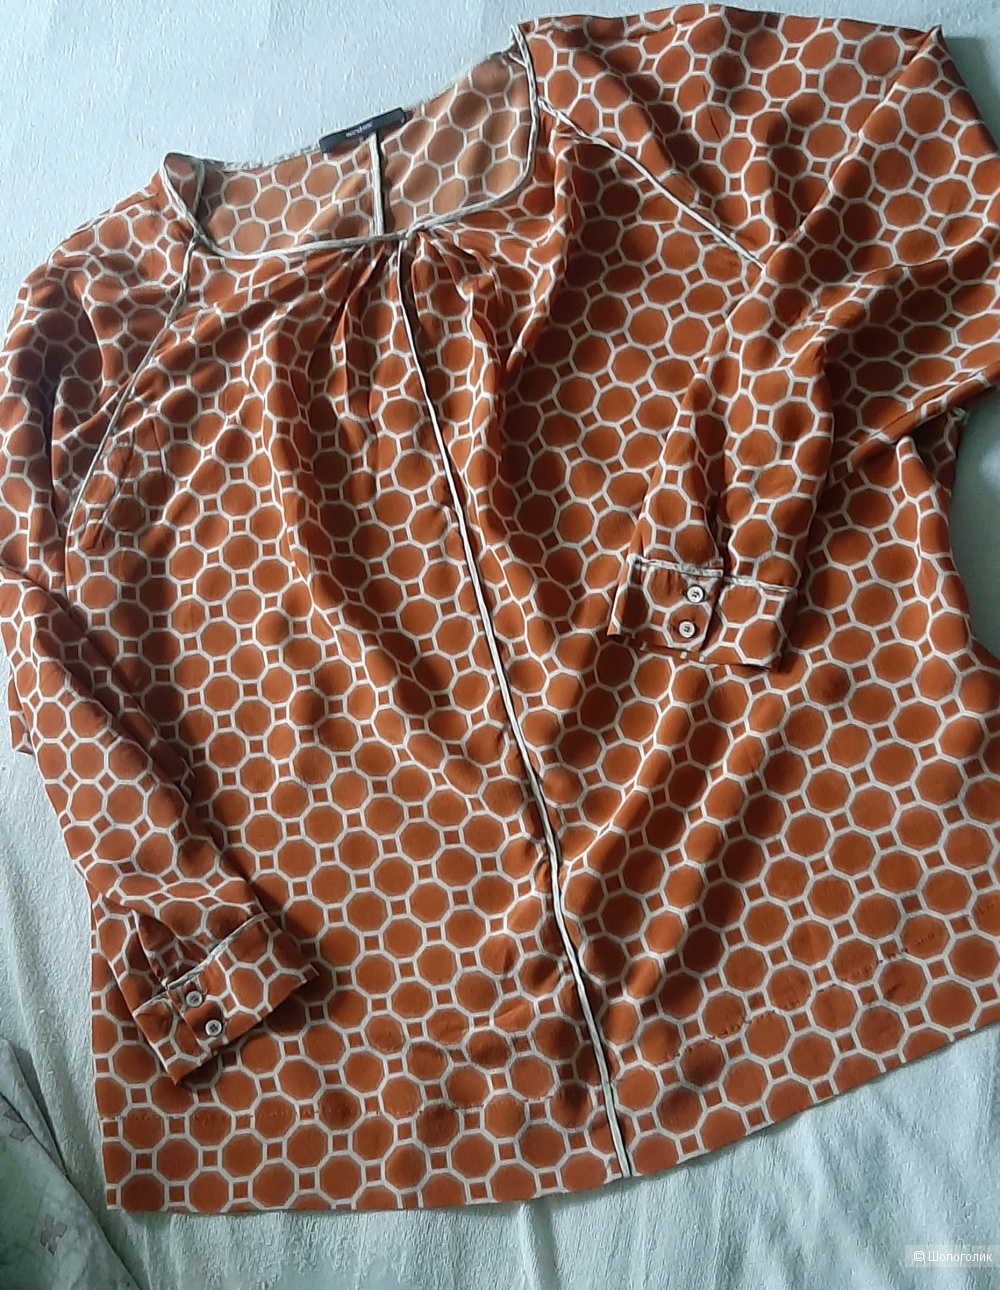 Шелковая блуза Windsor, евр.42 на 46-50